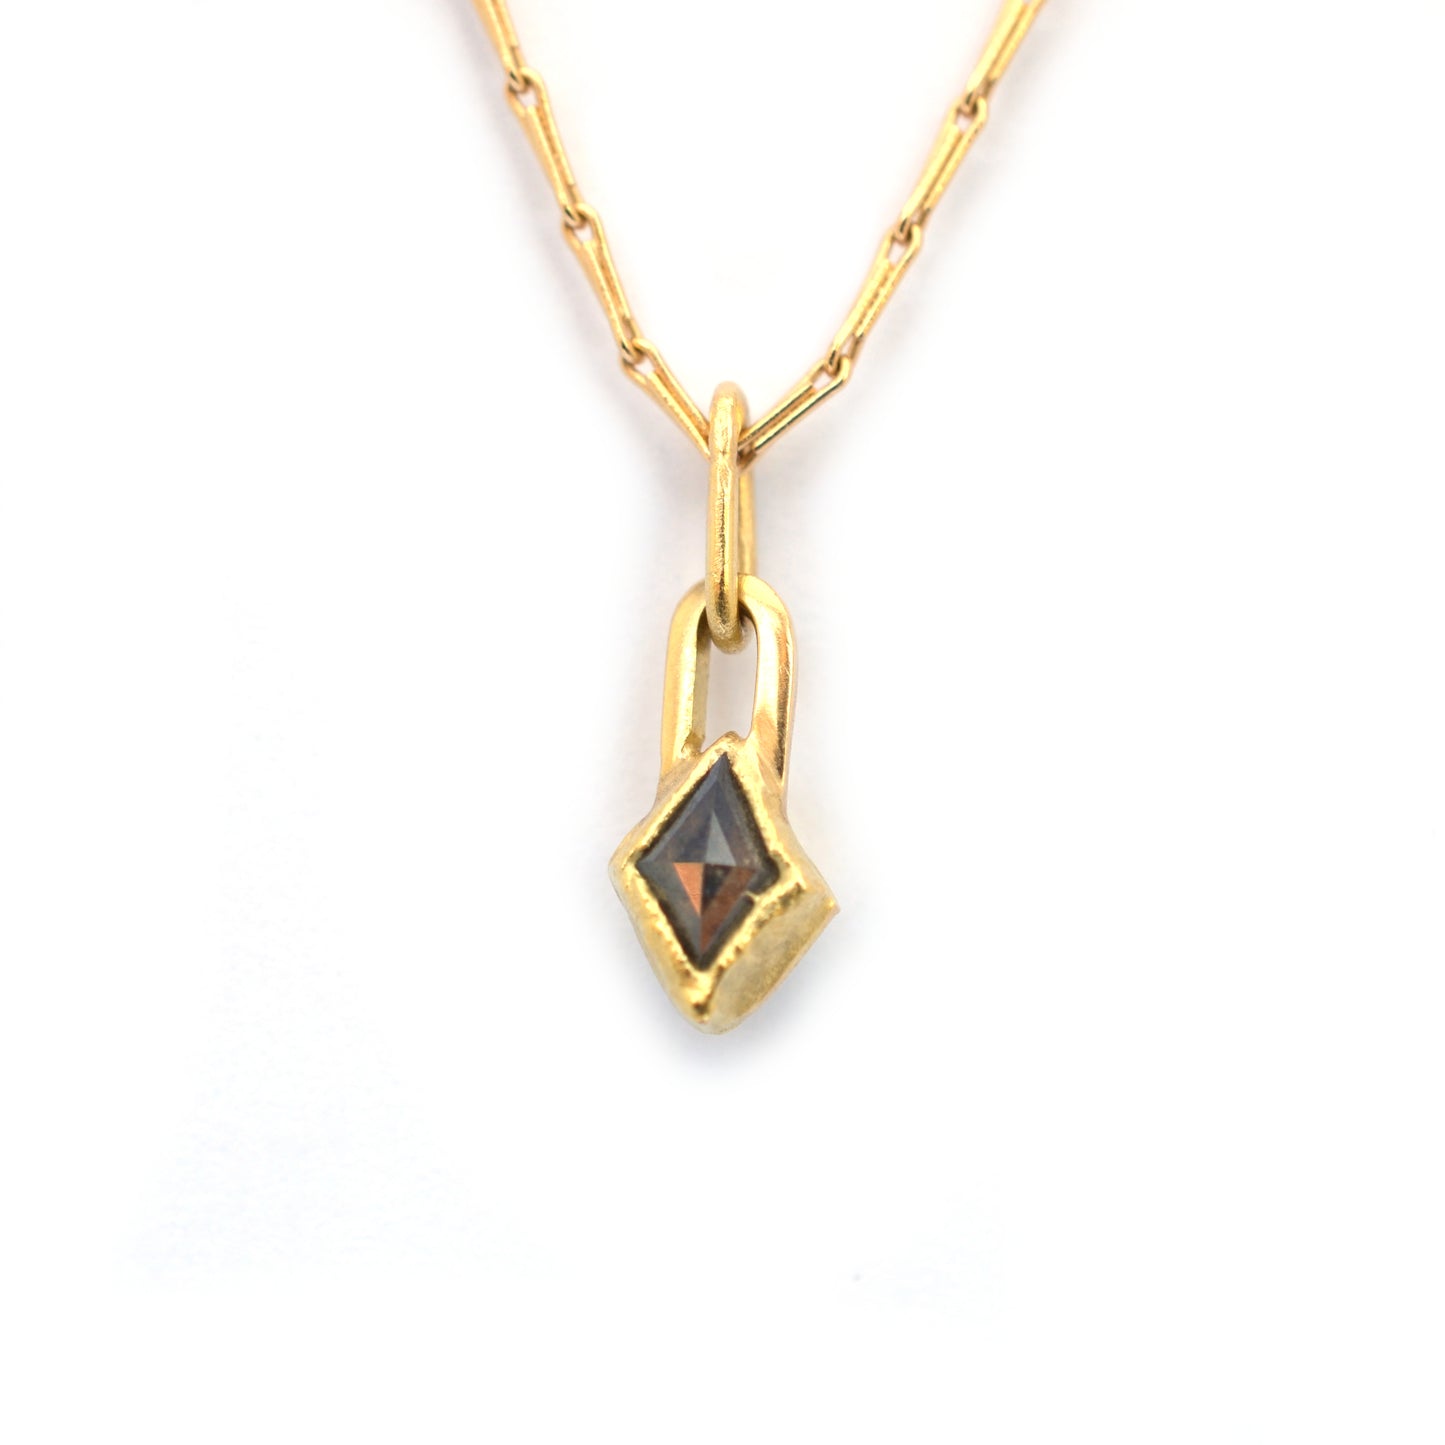 Molten gold shard diamond pendant necklace